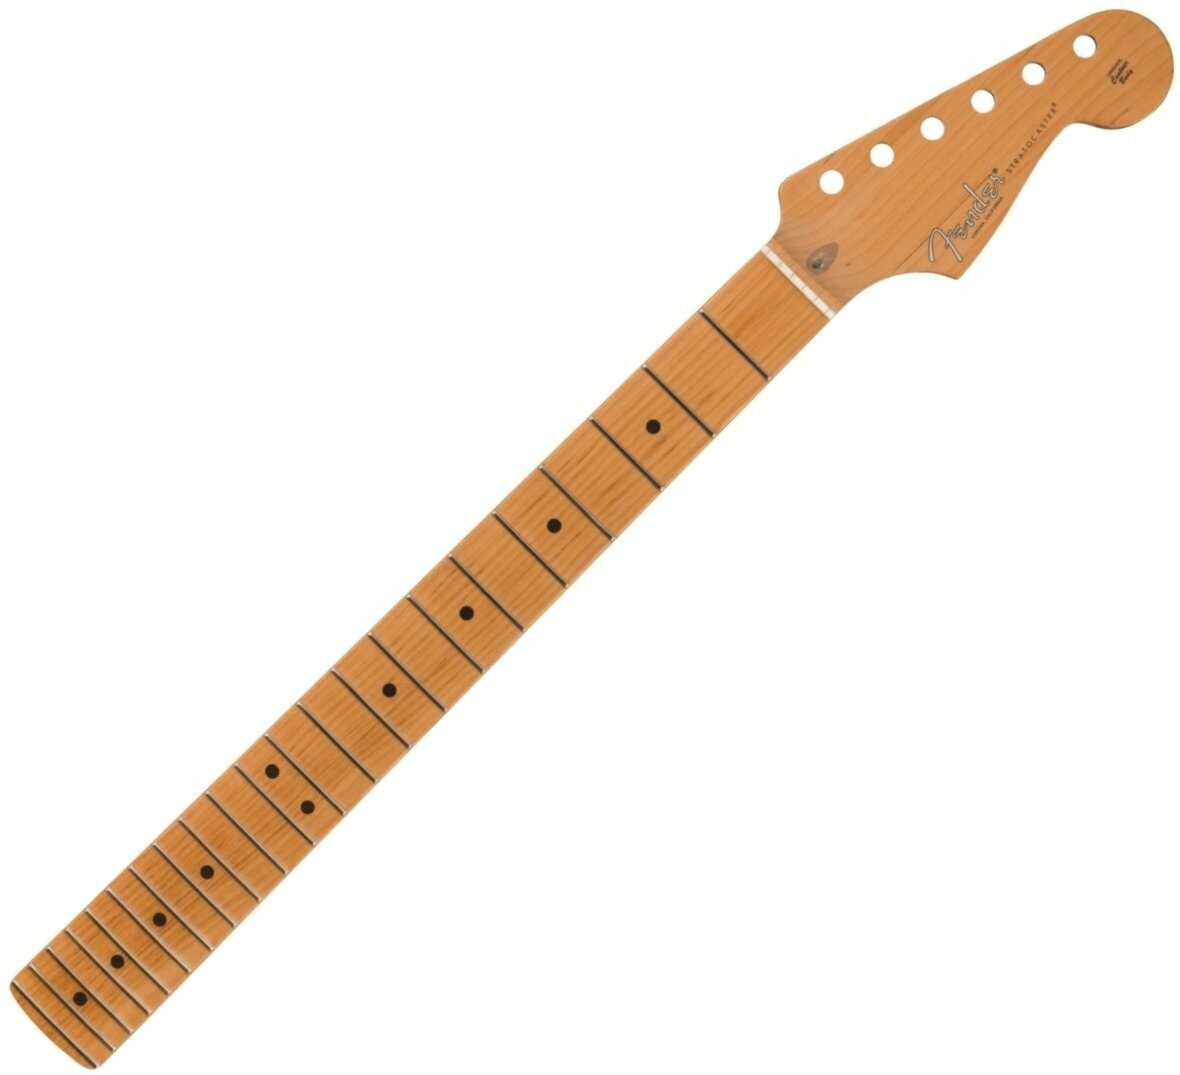 Fender American Professional II Stratocaster 22 Žíhaný javor (Roasted Maple) Kytarový krk Fender